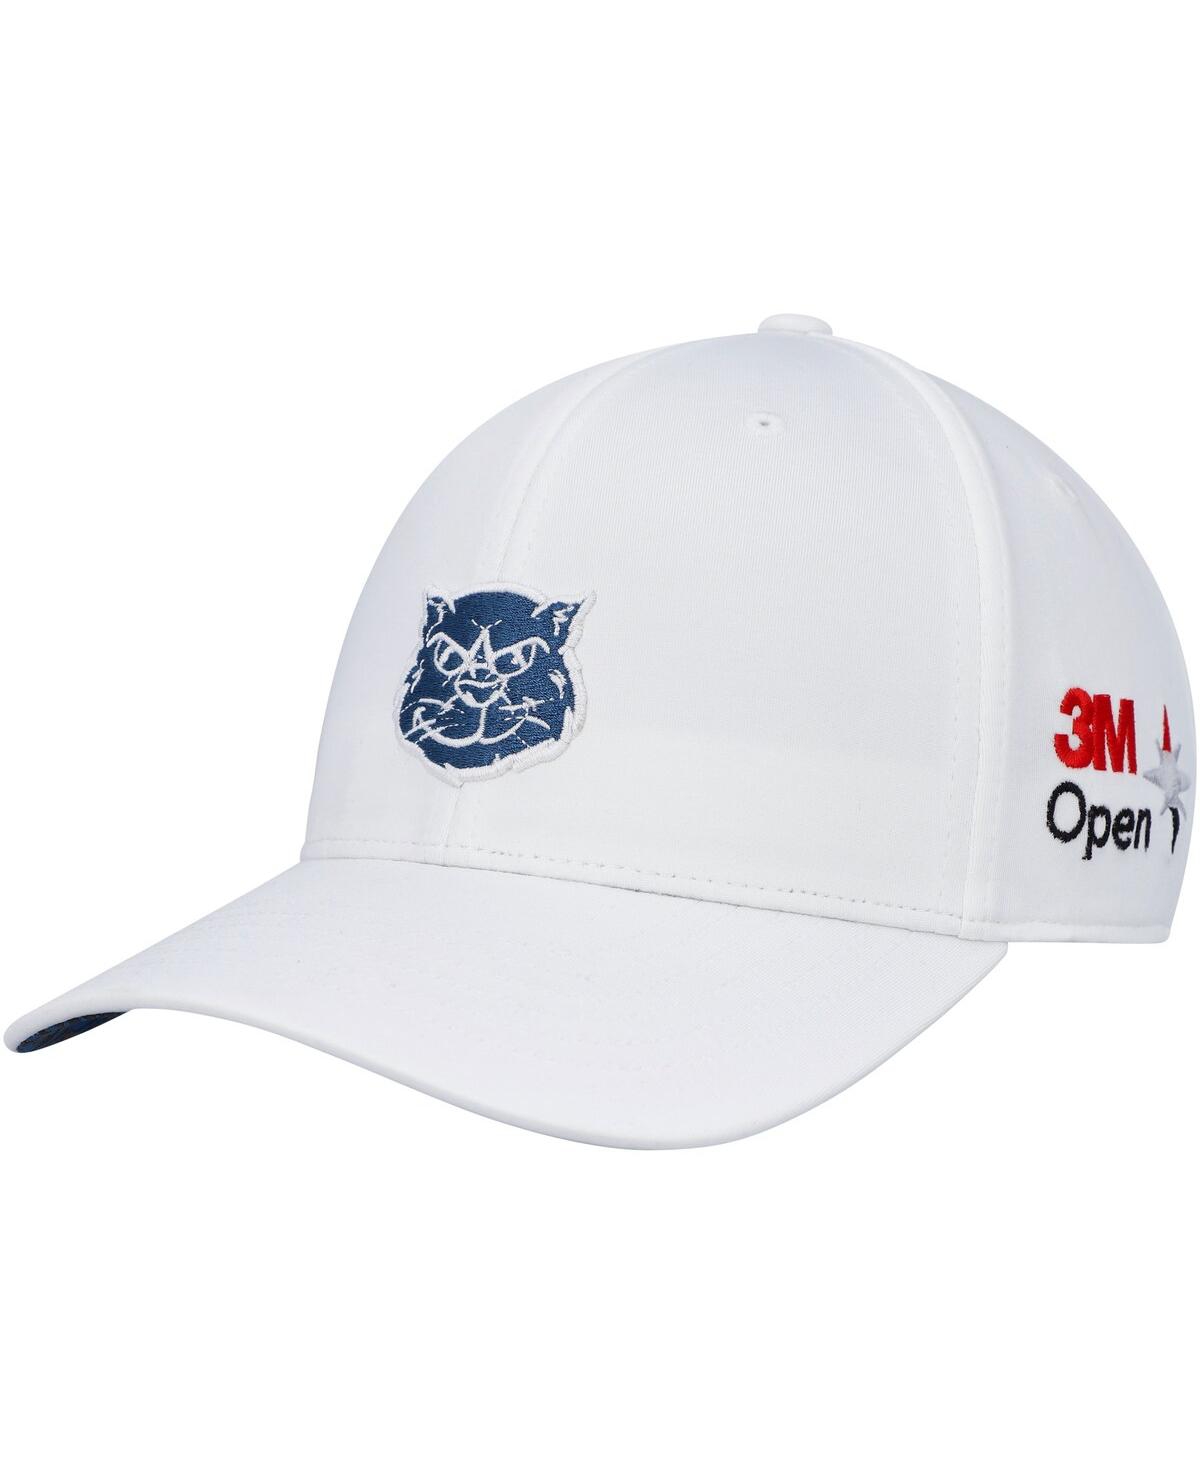 Men's Puma White 3M Open Golf x Hoops Adjustable Hat - White